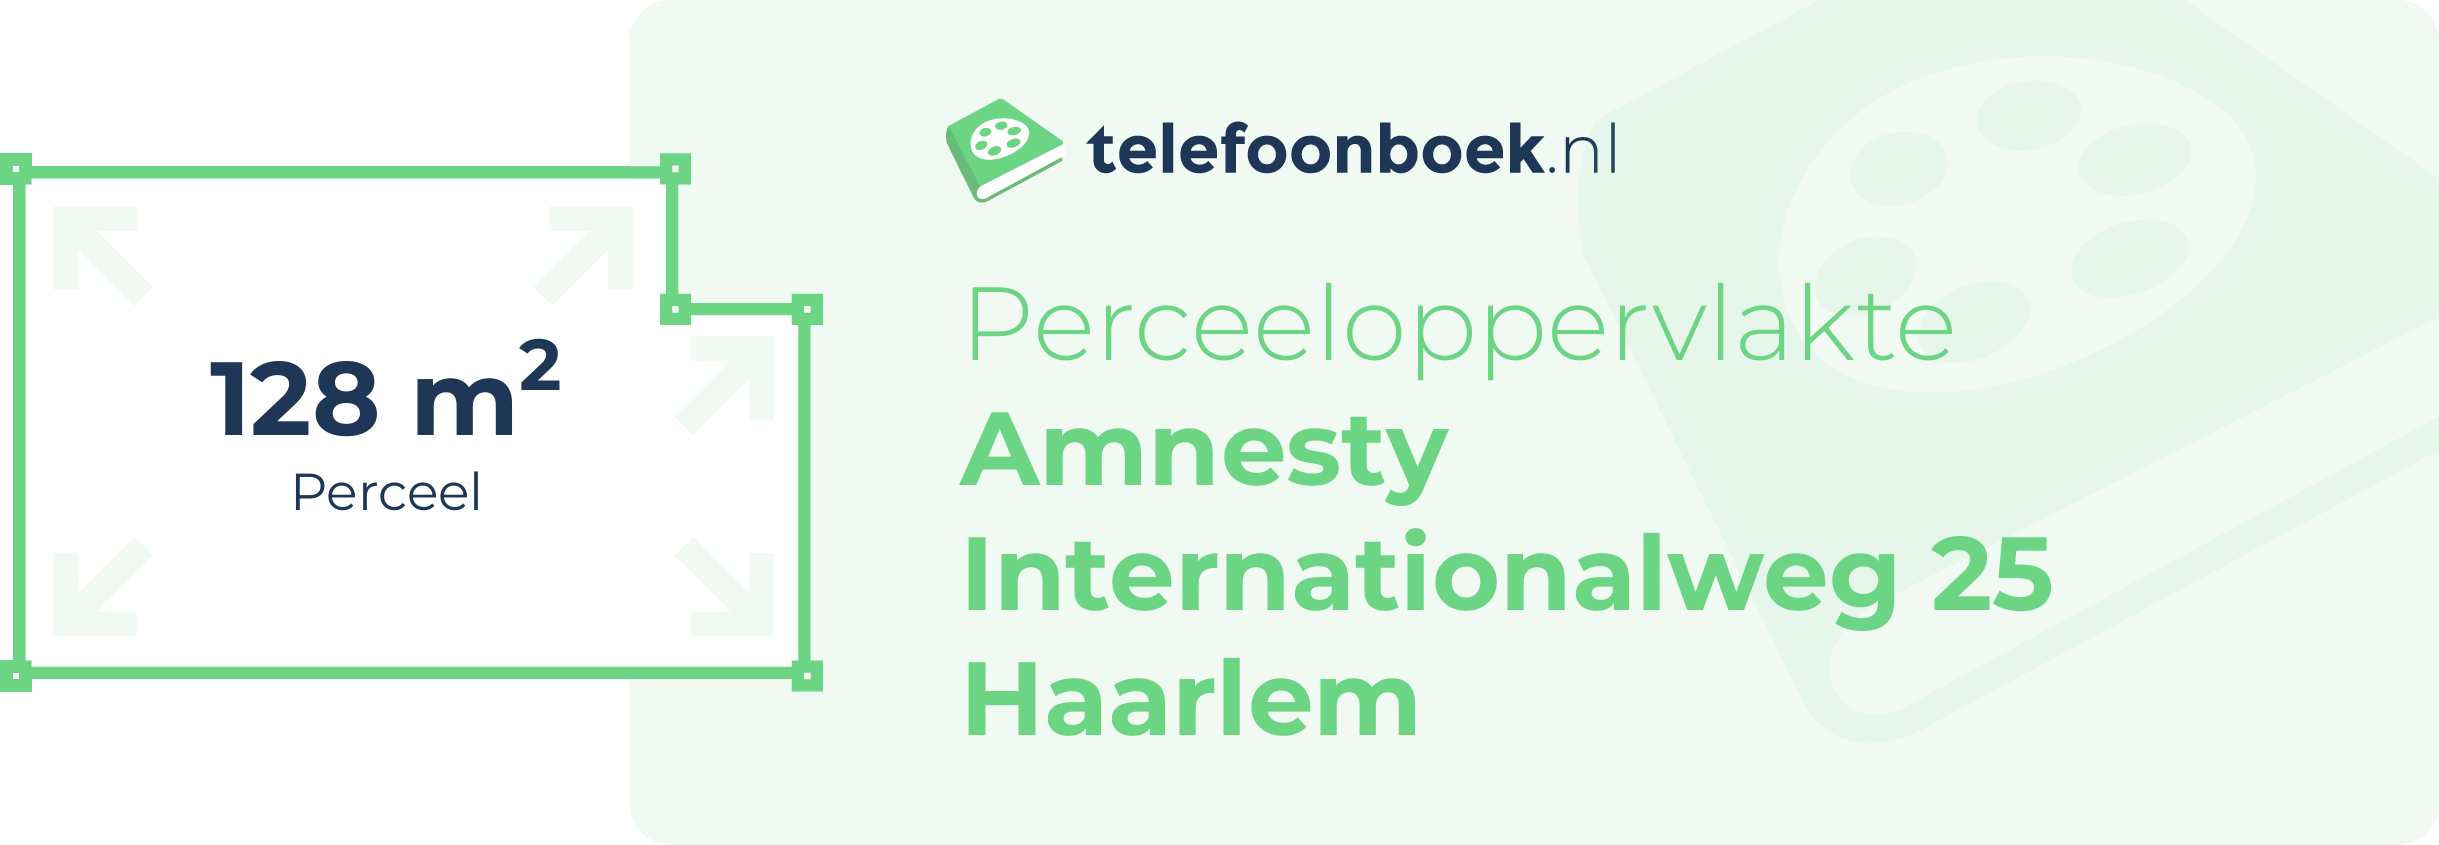 Perceeloppervlakte Amnesty Internationalweg 25 Haarlem